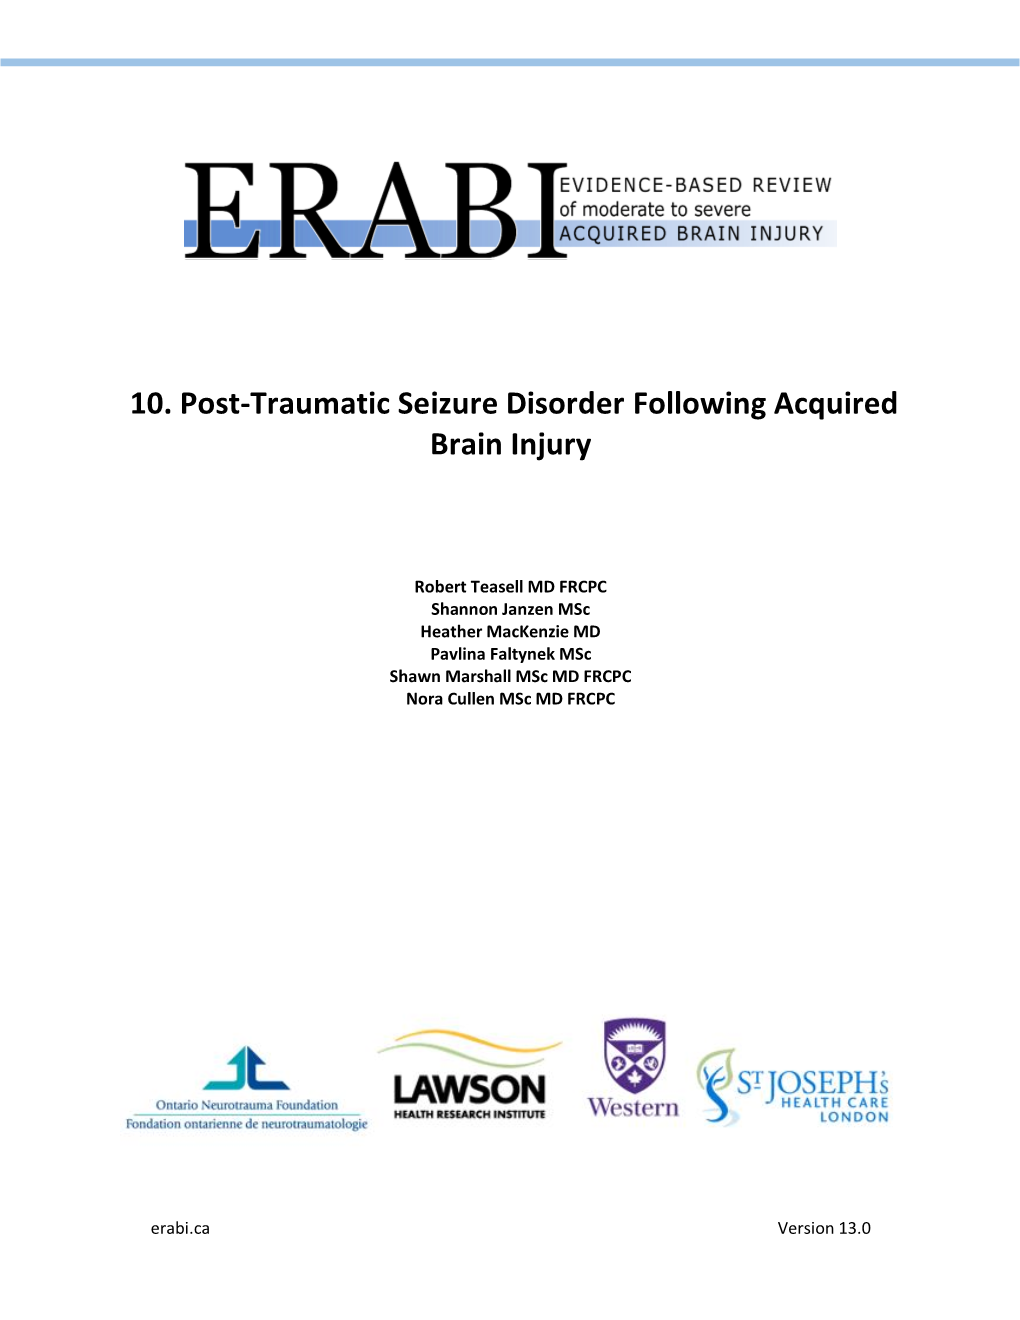 10. Post-Traumatic Seizure Disorder Following Acquired Brain Injury